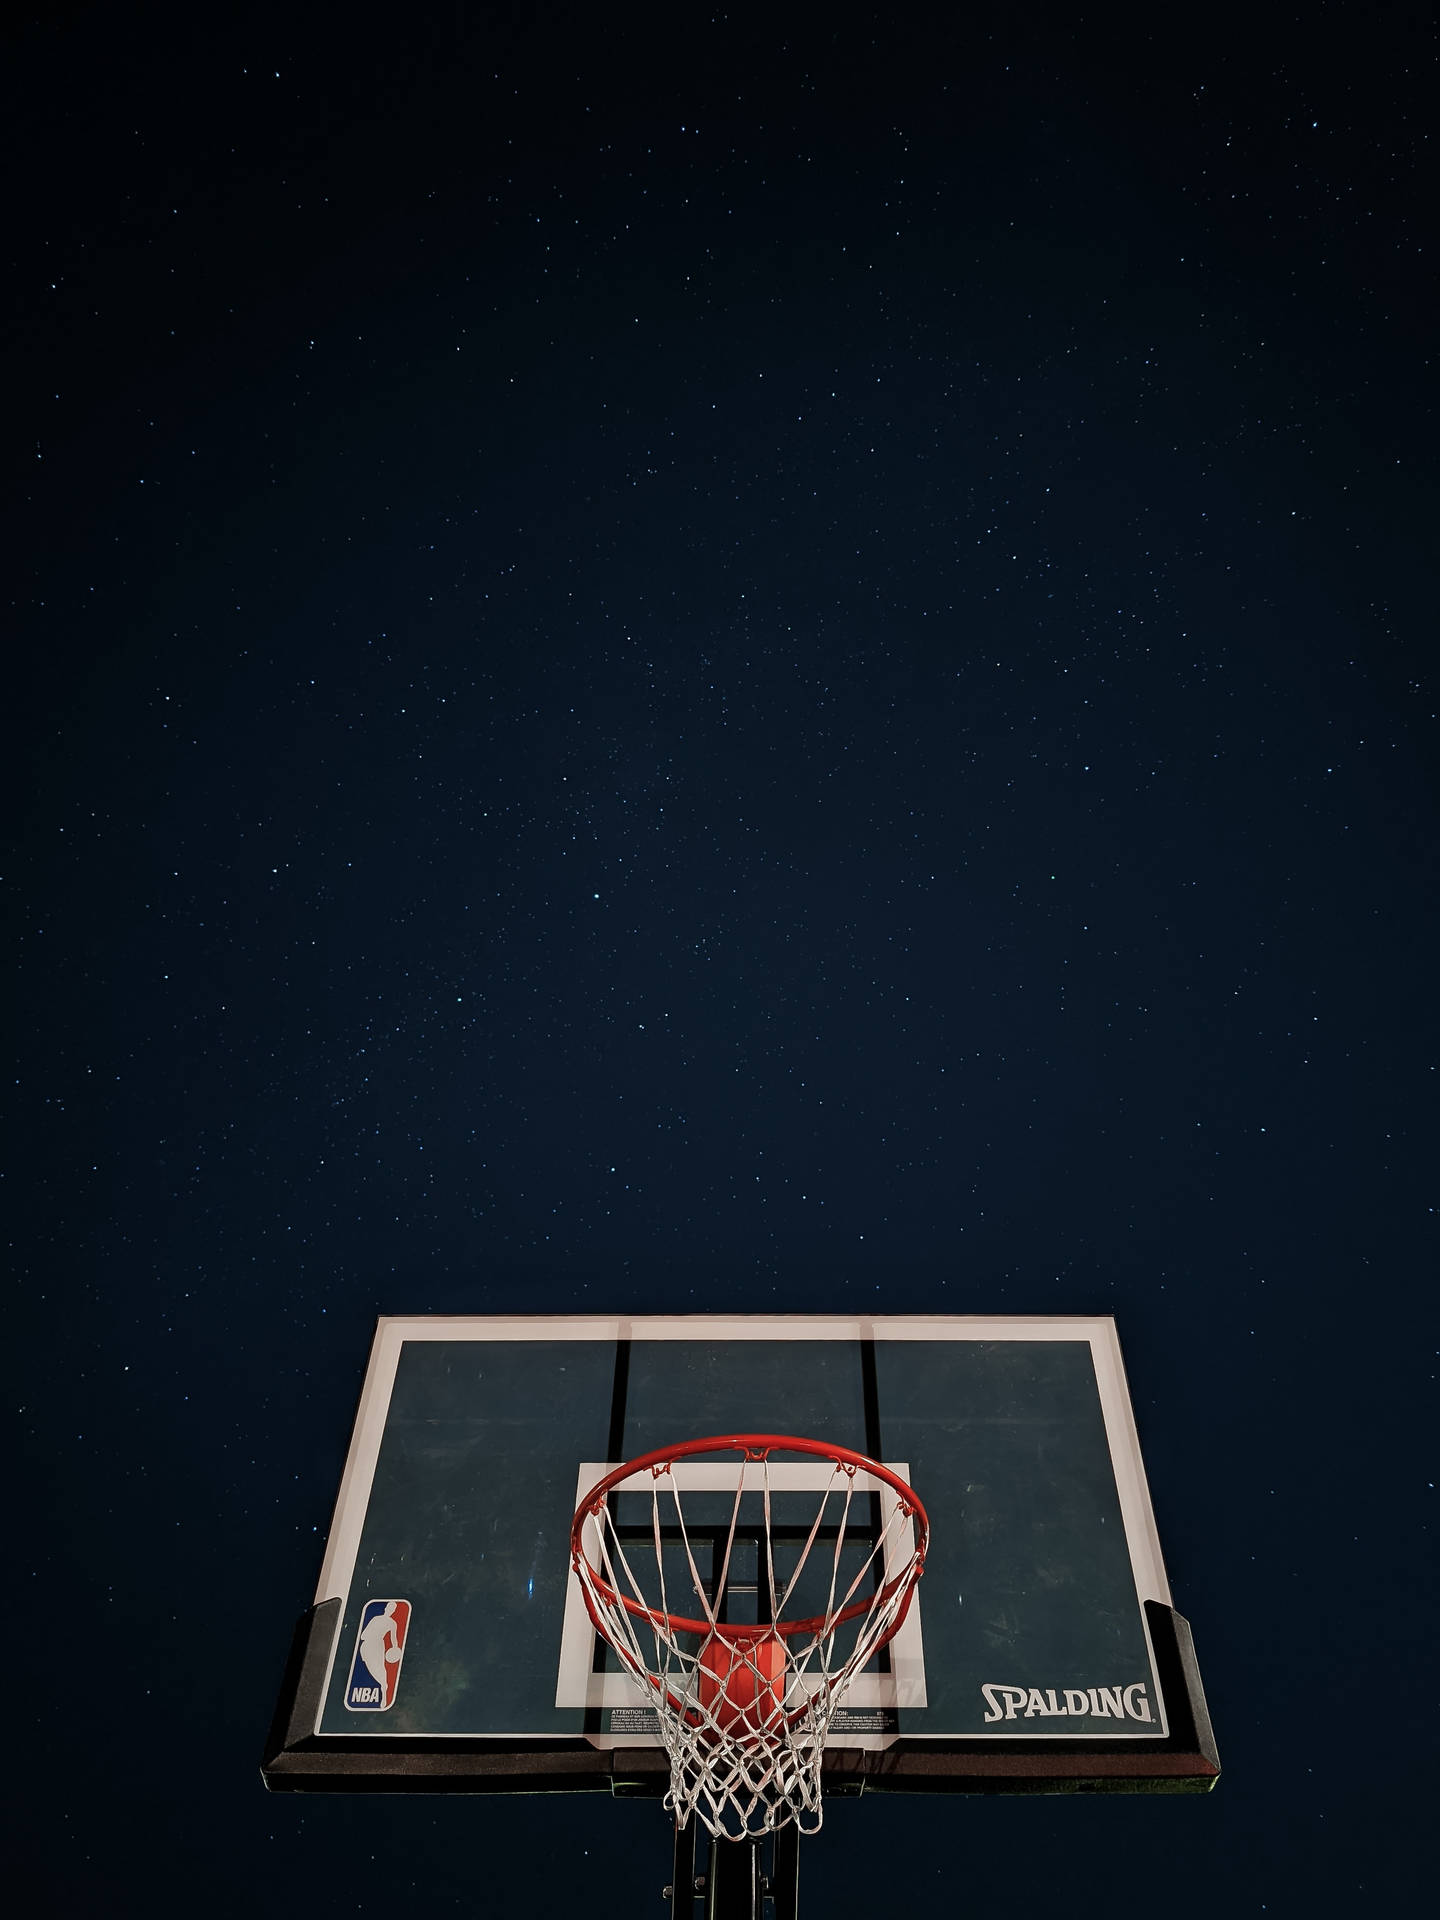 A Basketball Hoop In The Sky